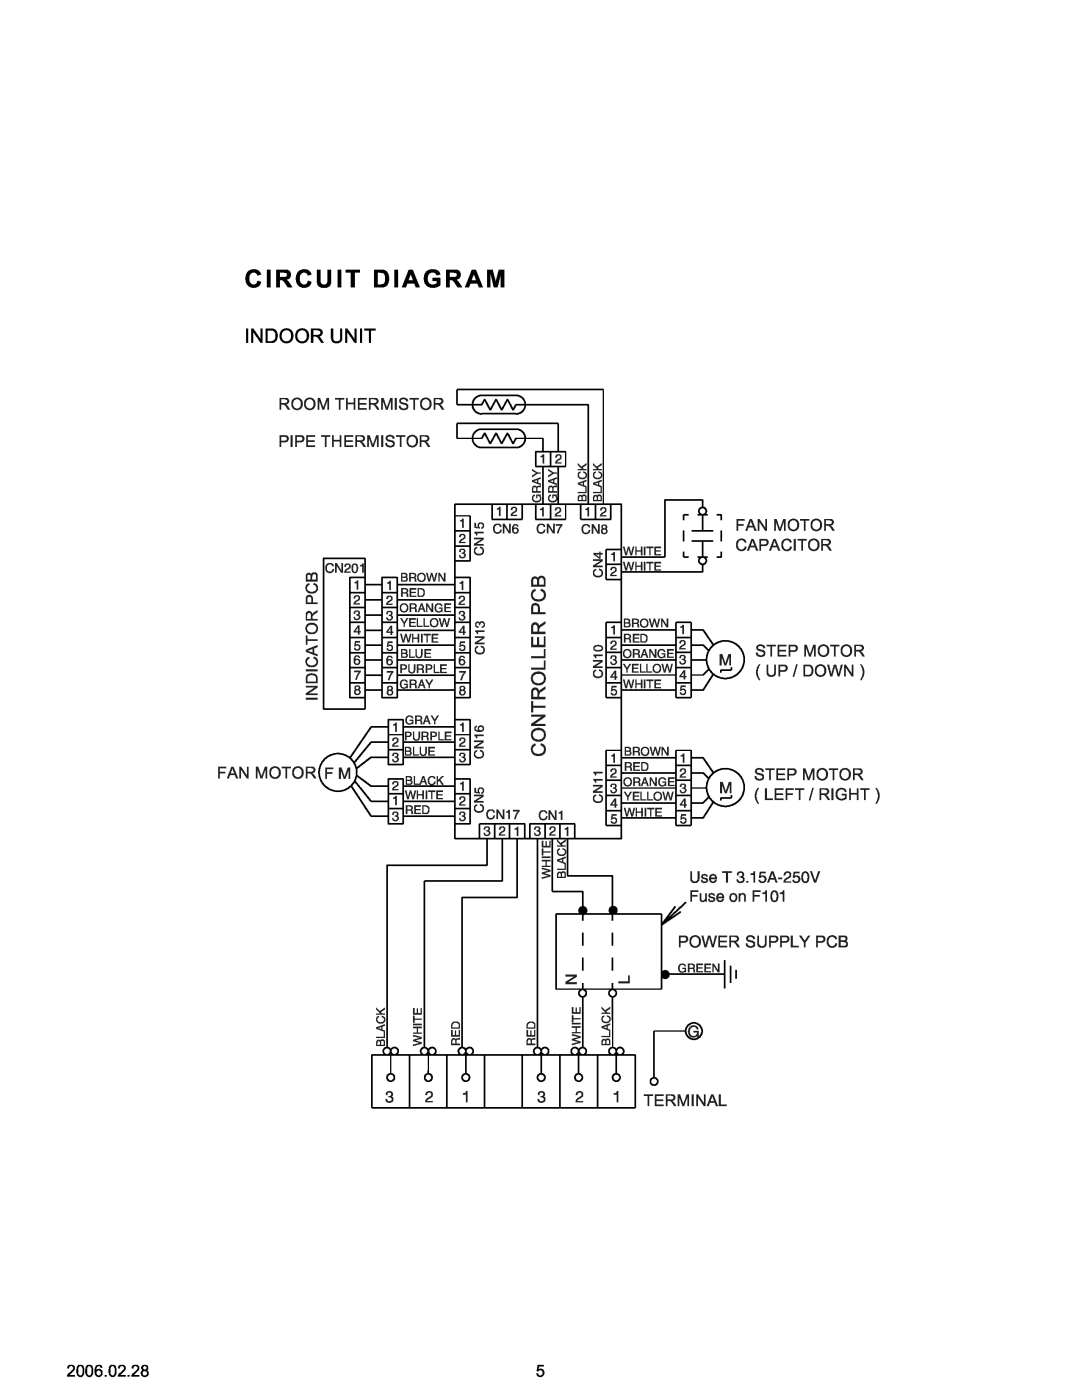 Friedrich MR36Y3F, MS36Y3F specifications Circuit Diagram, Indoor Unit 